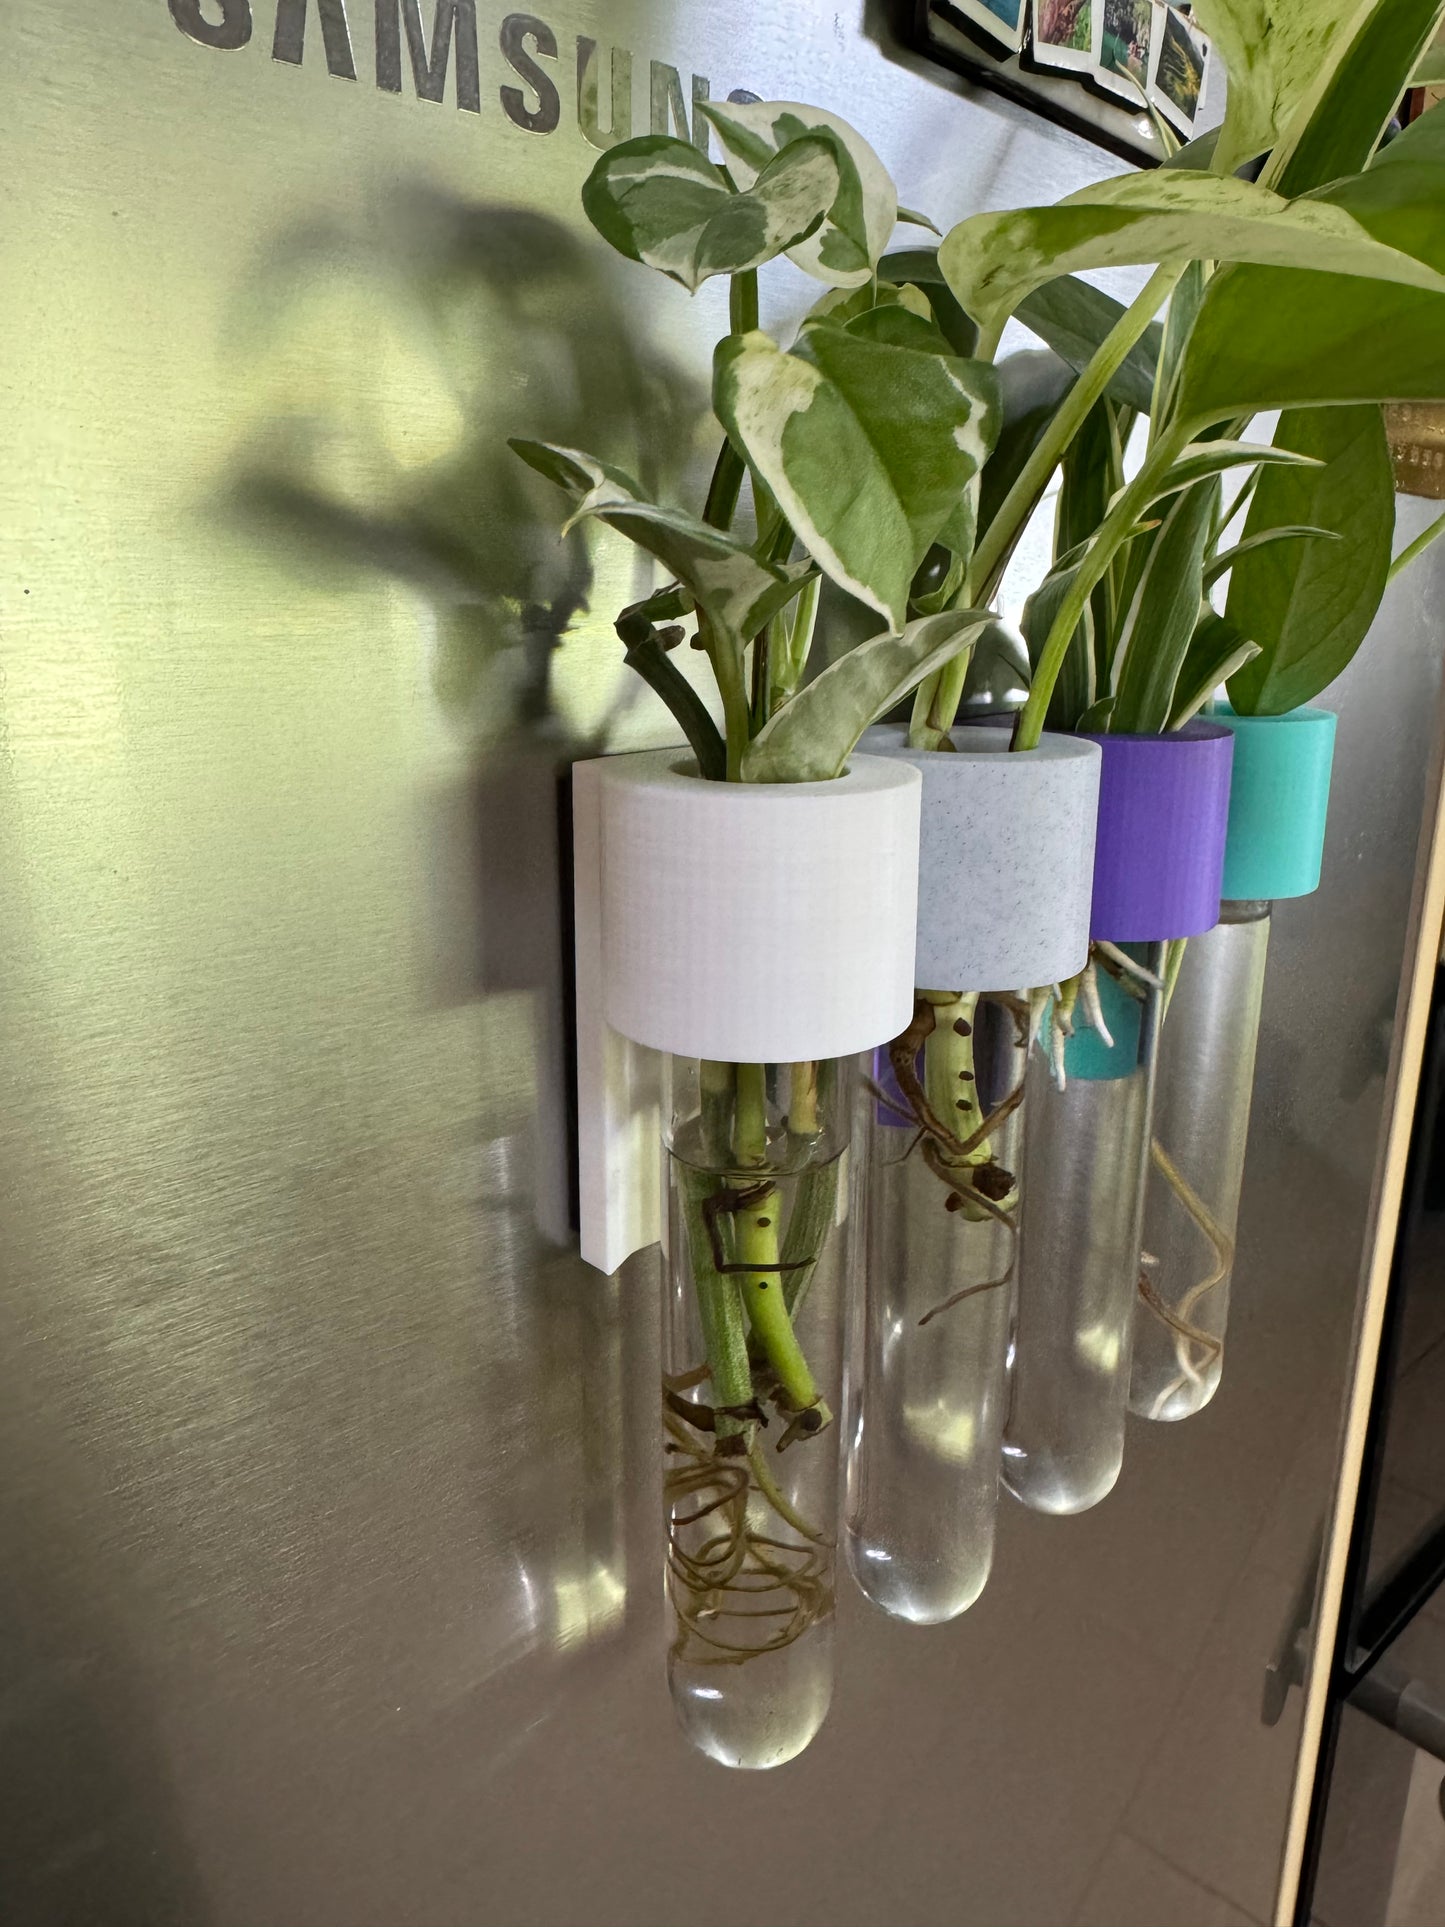 3D Printed Magnetic Fridge Hydroponic Planter/Vase